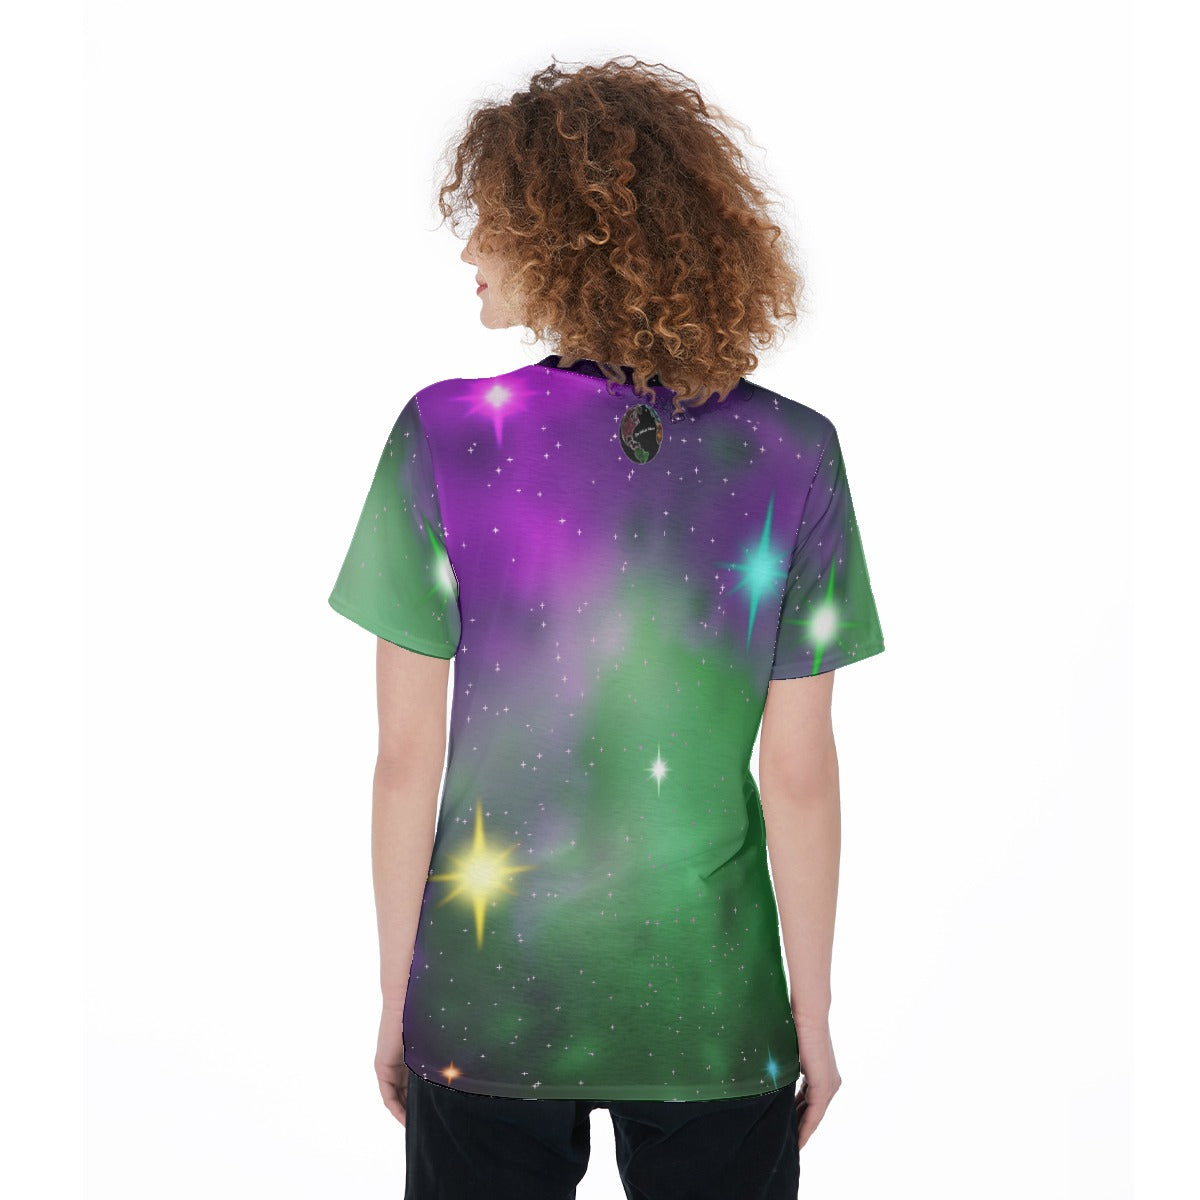 Love Thy Queer Vibes Women's O-Neck Fashion T-Shirt The Nebula Palace: Spiritually Cosmic Fashion